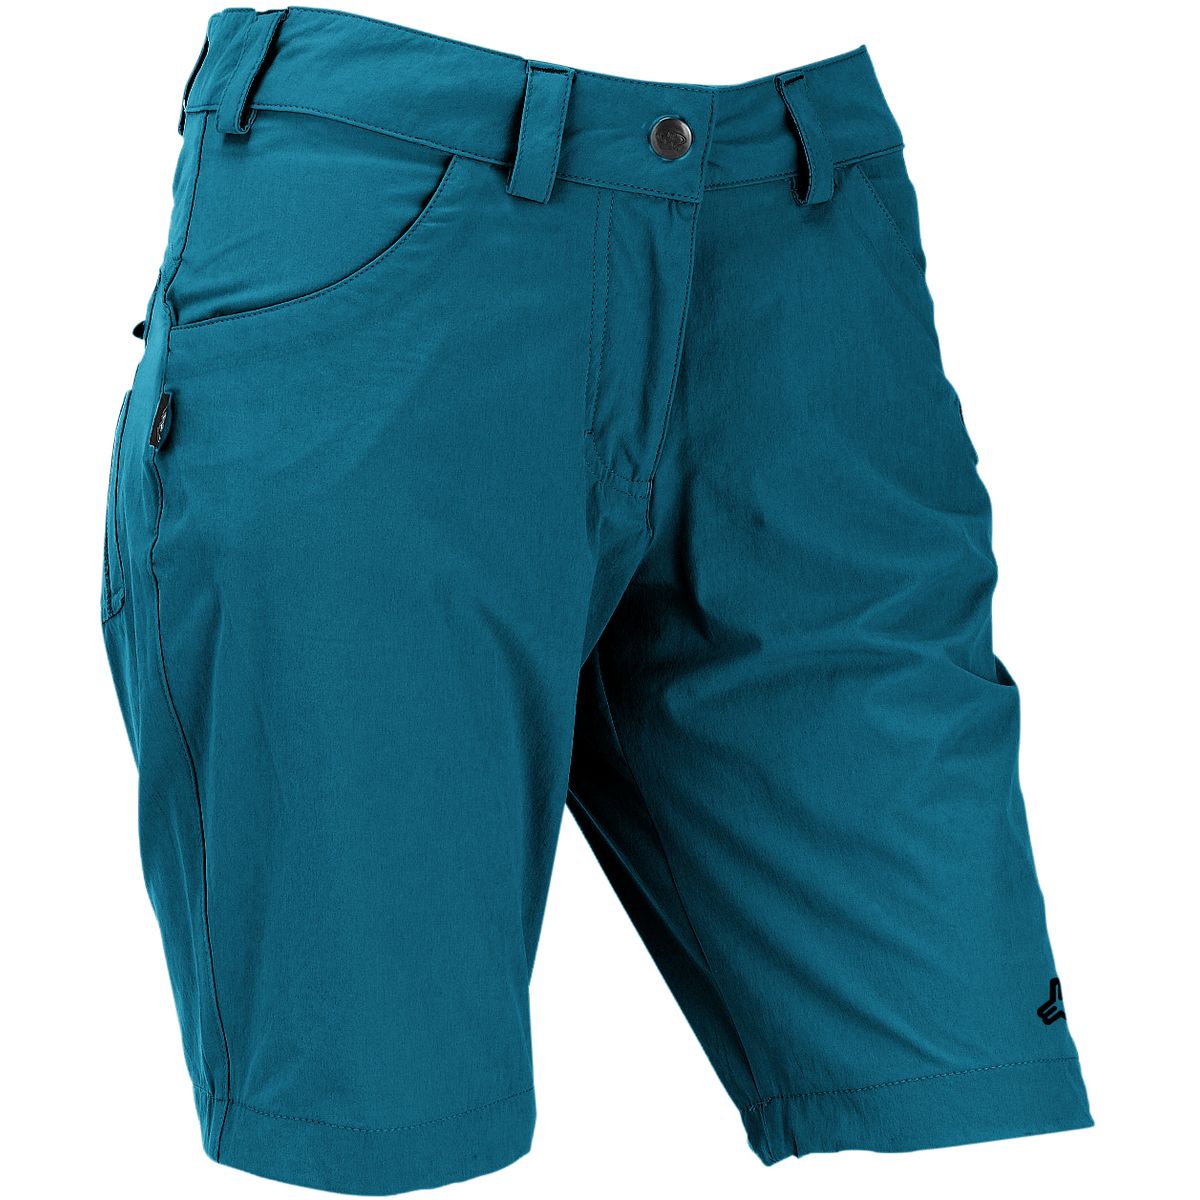 Maul Rimini Damen Bermuda Shorts